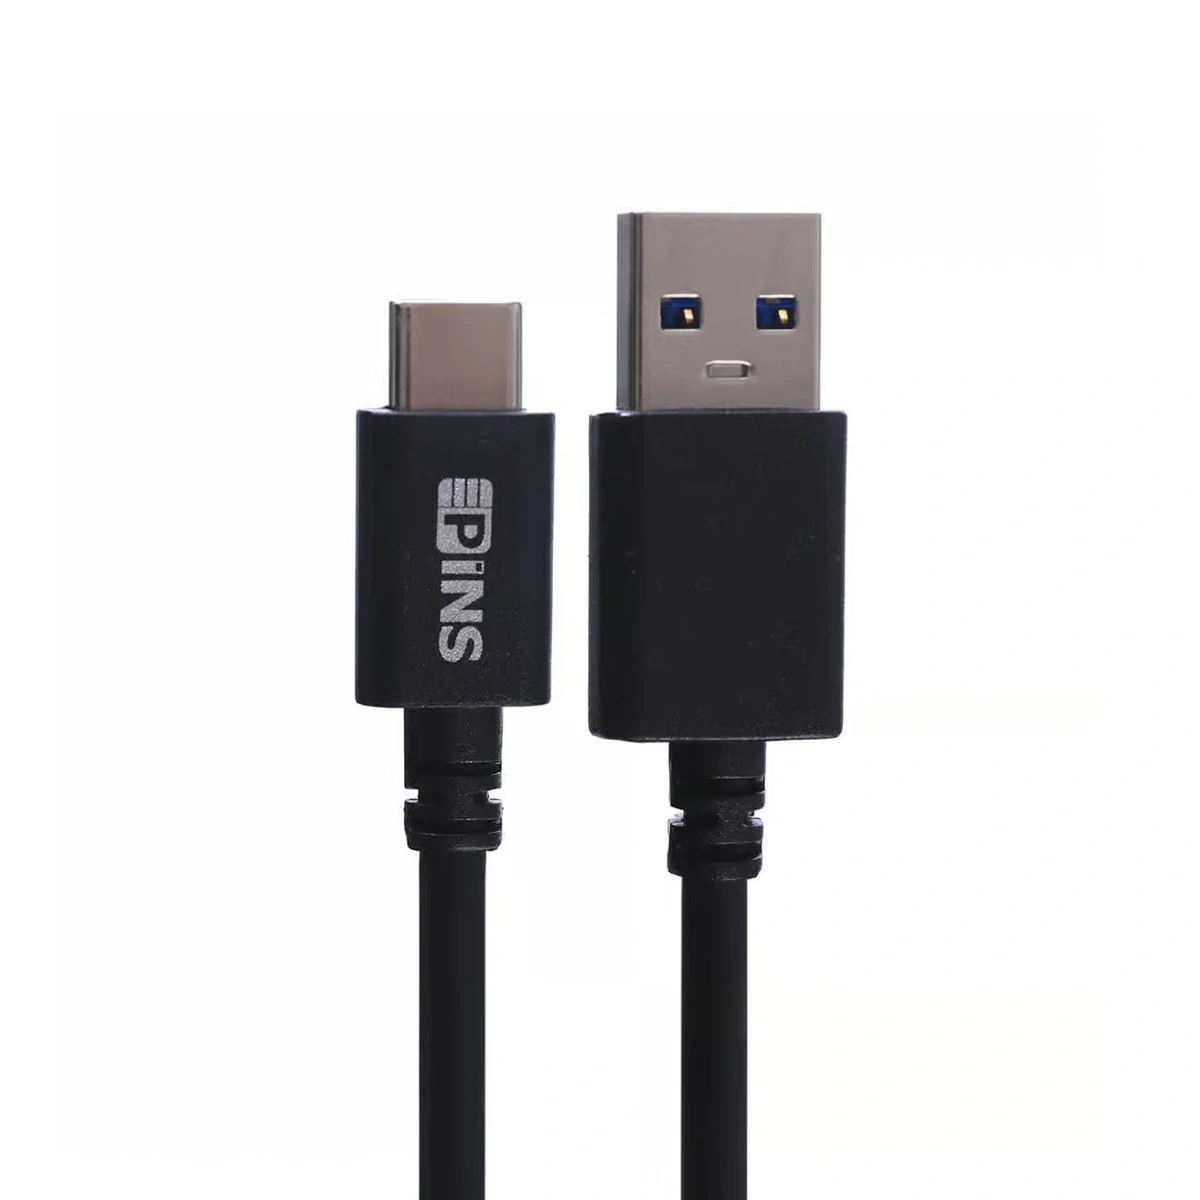 Pins Cable Type C USB 3.1 Gen 1 Black